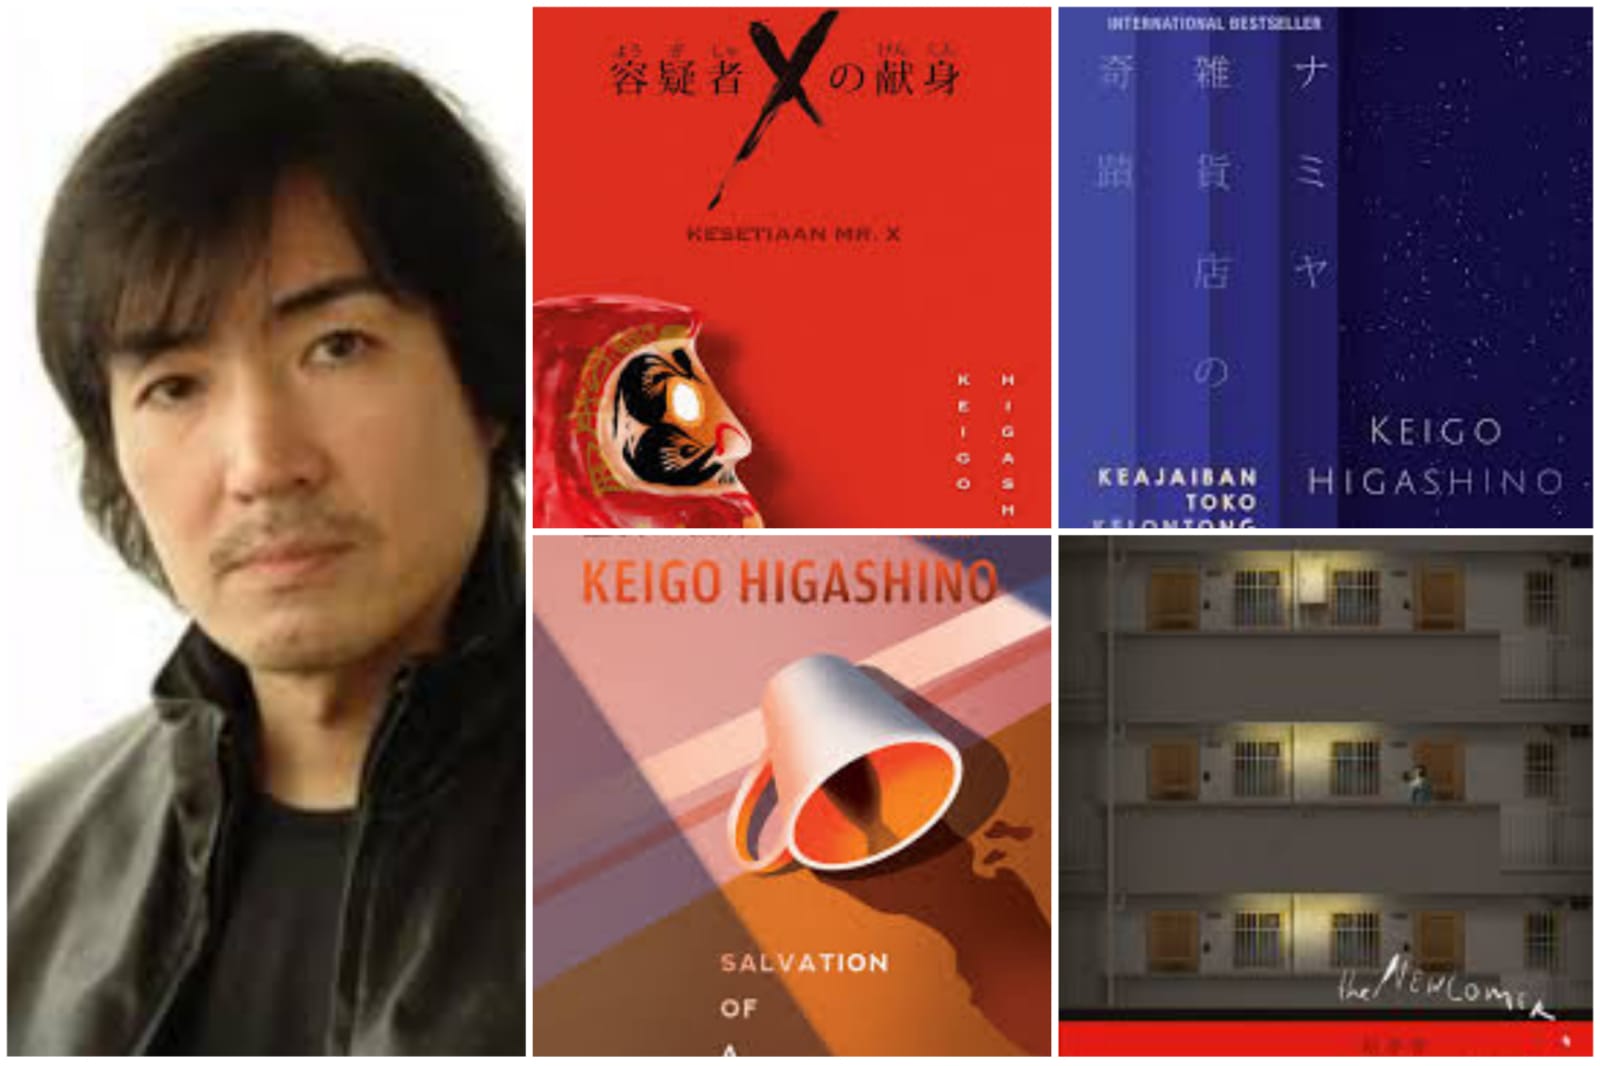 Buat Liburanmu Lebih Seru, Yuk Baca 4 Novel Misteri Berlatar Jepang Karya Keigo Higashino!